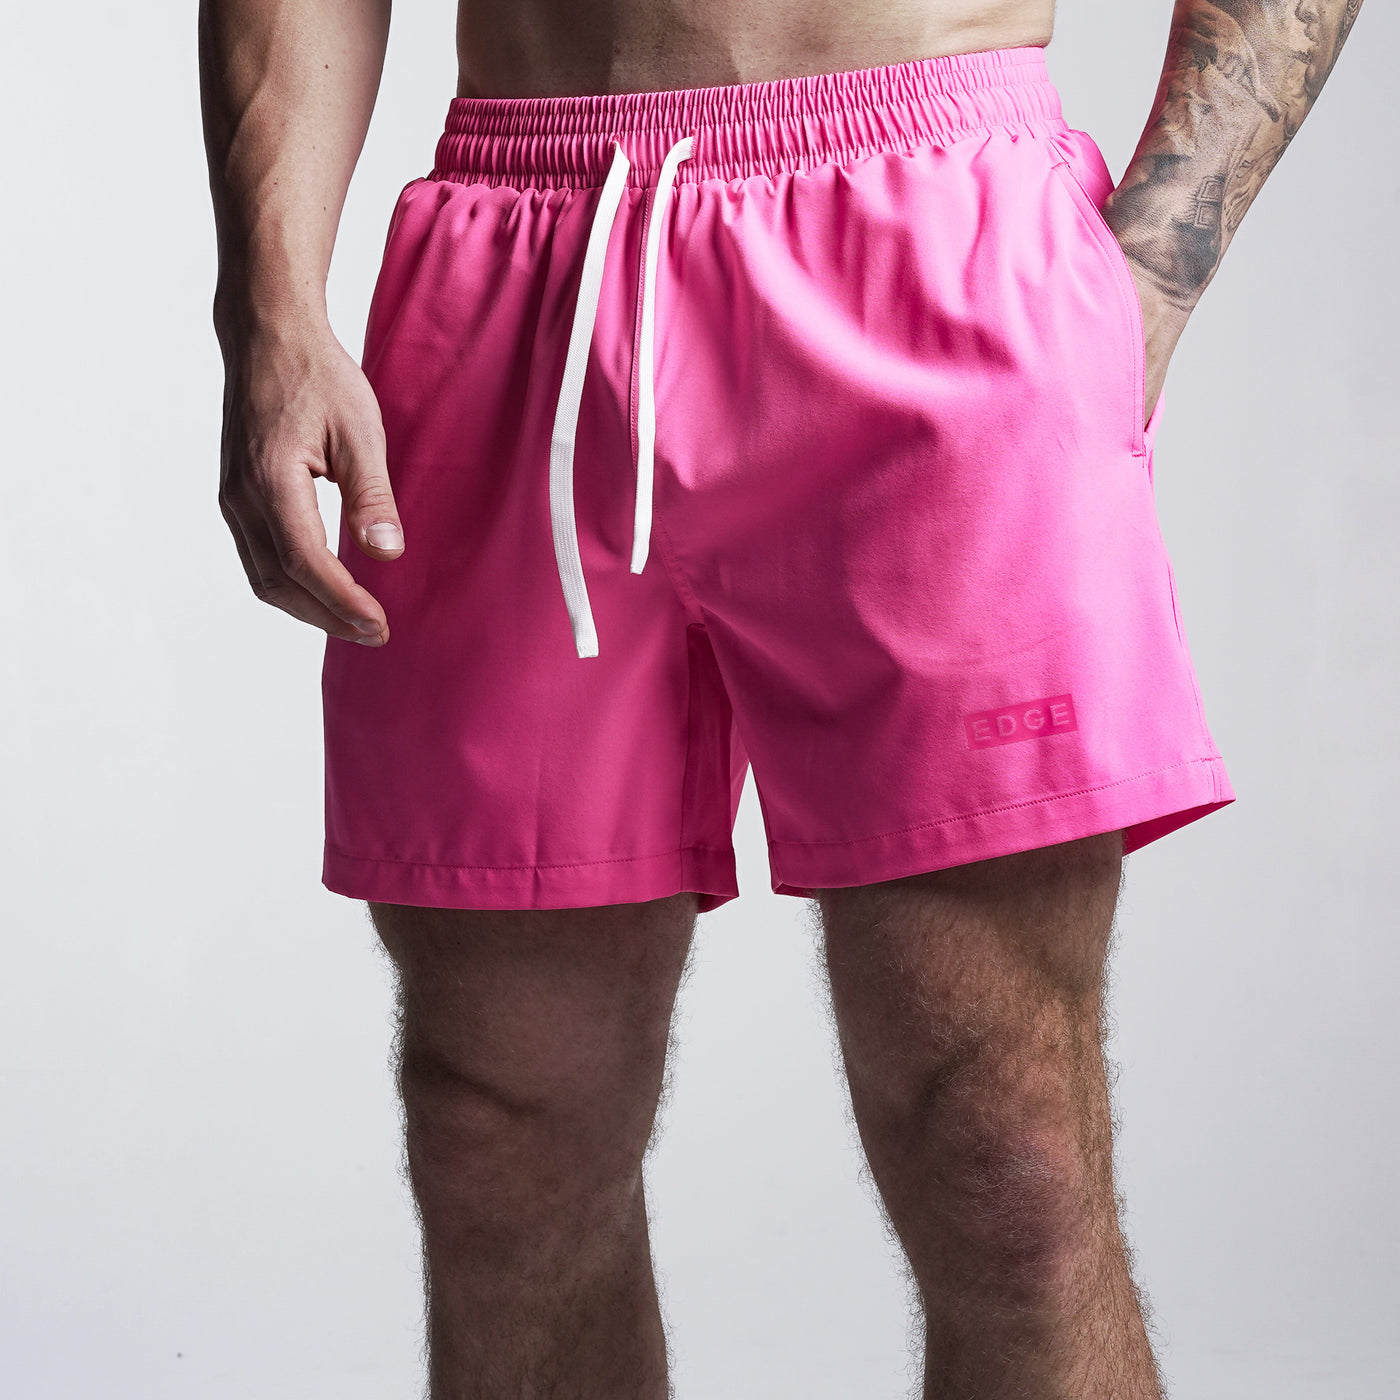 Swim Shorts - Neon Pink